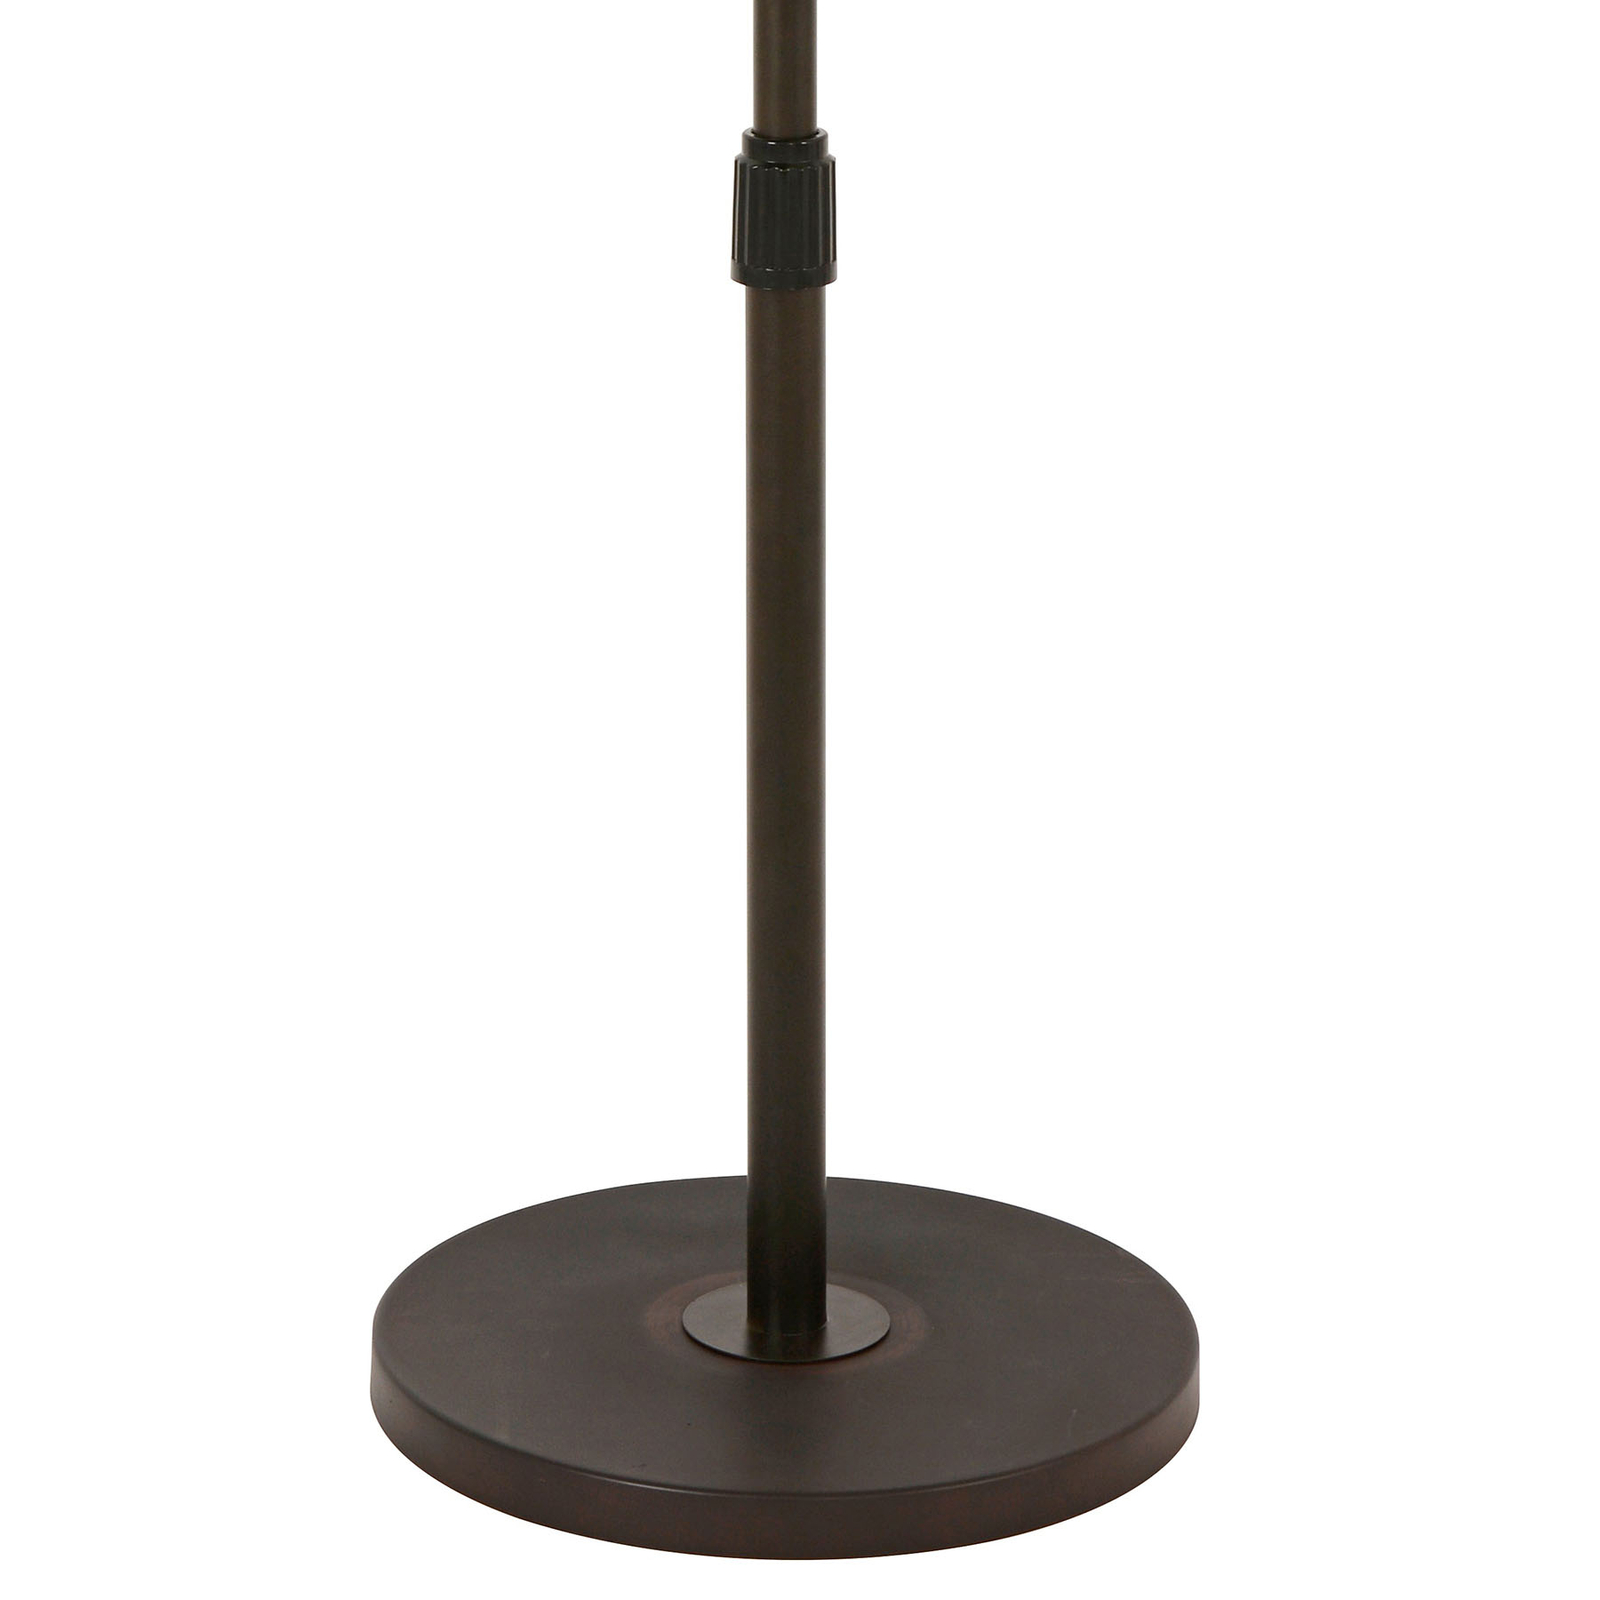 Beacon pedestal fan Breeze bronze-coloured, round base, quiet